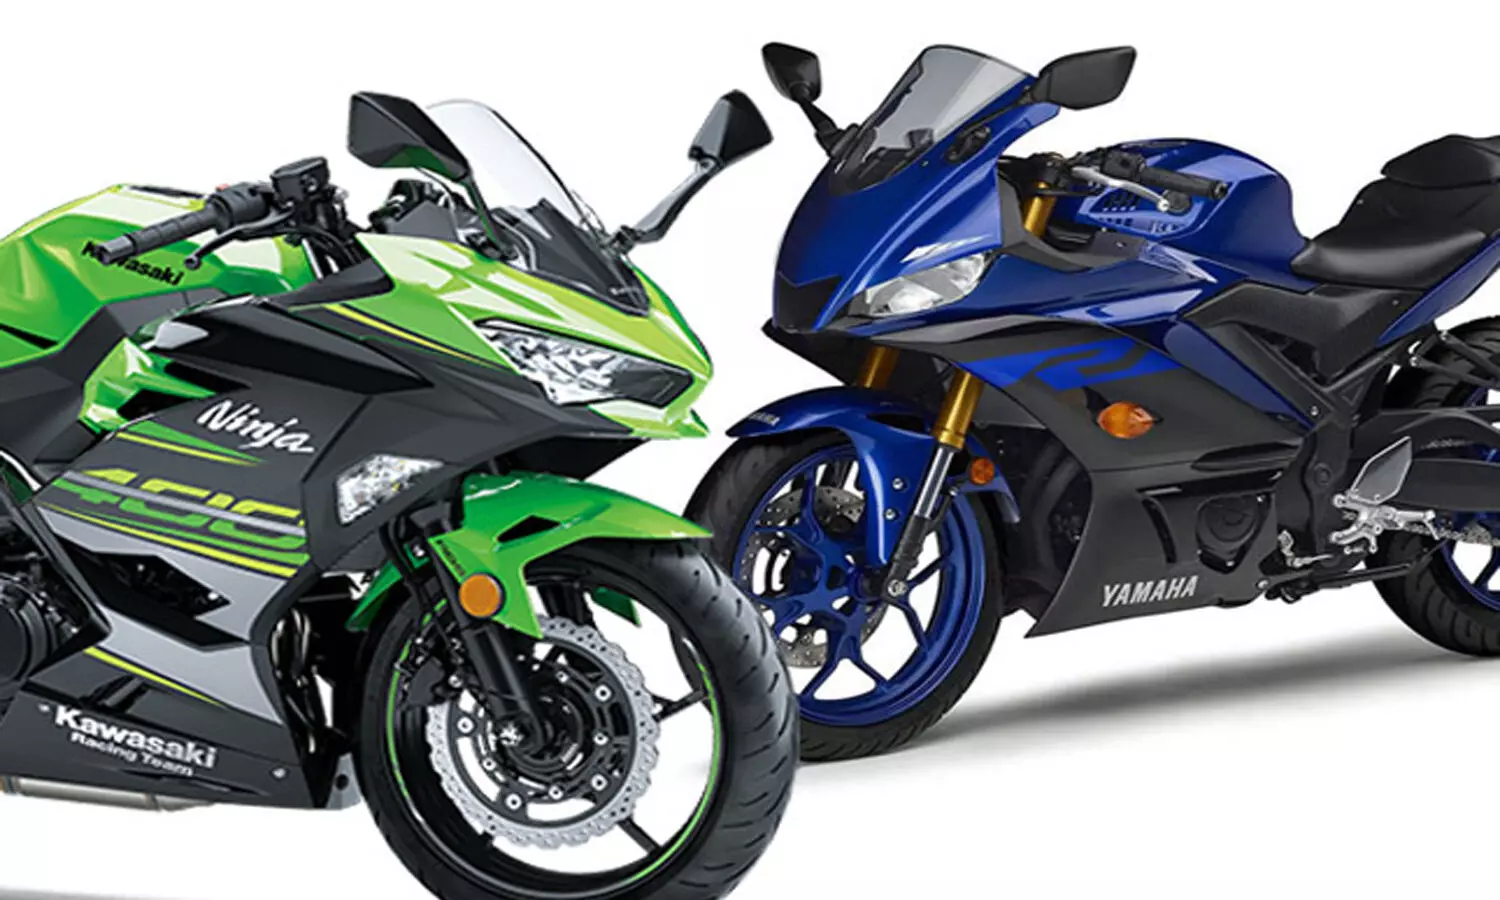 Kawasaki and Yamaha